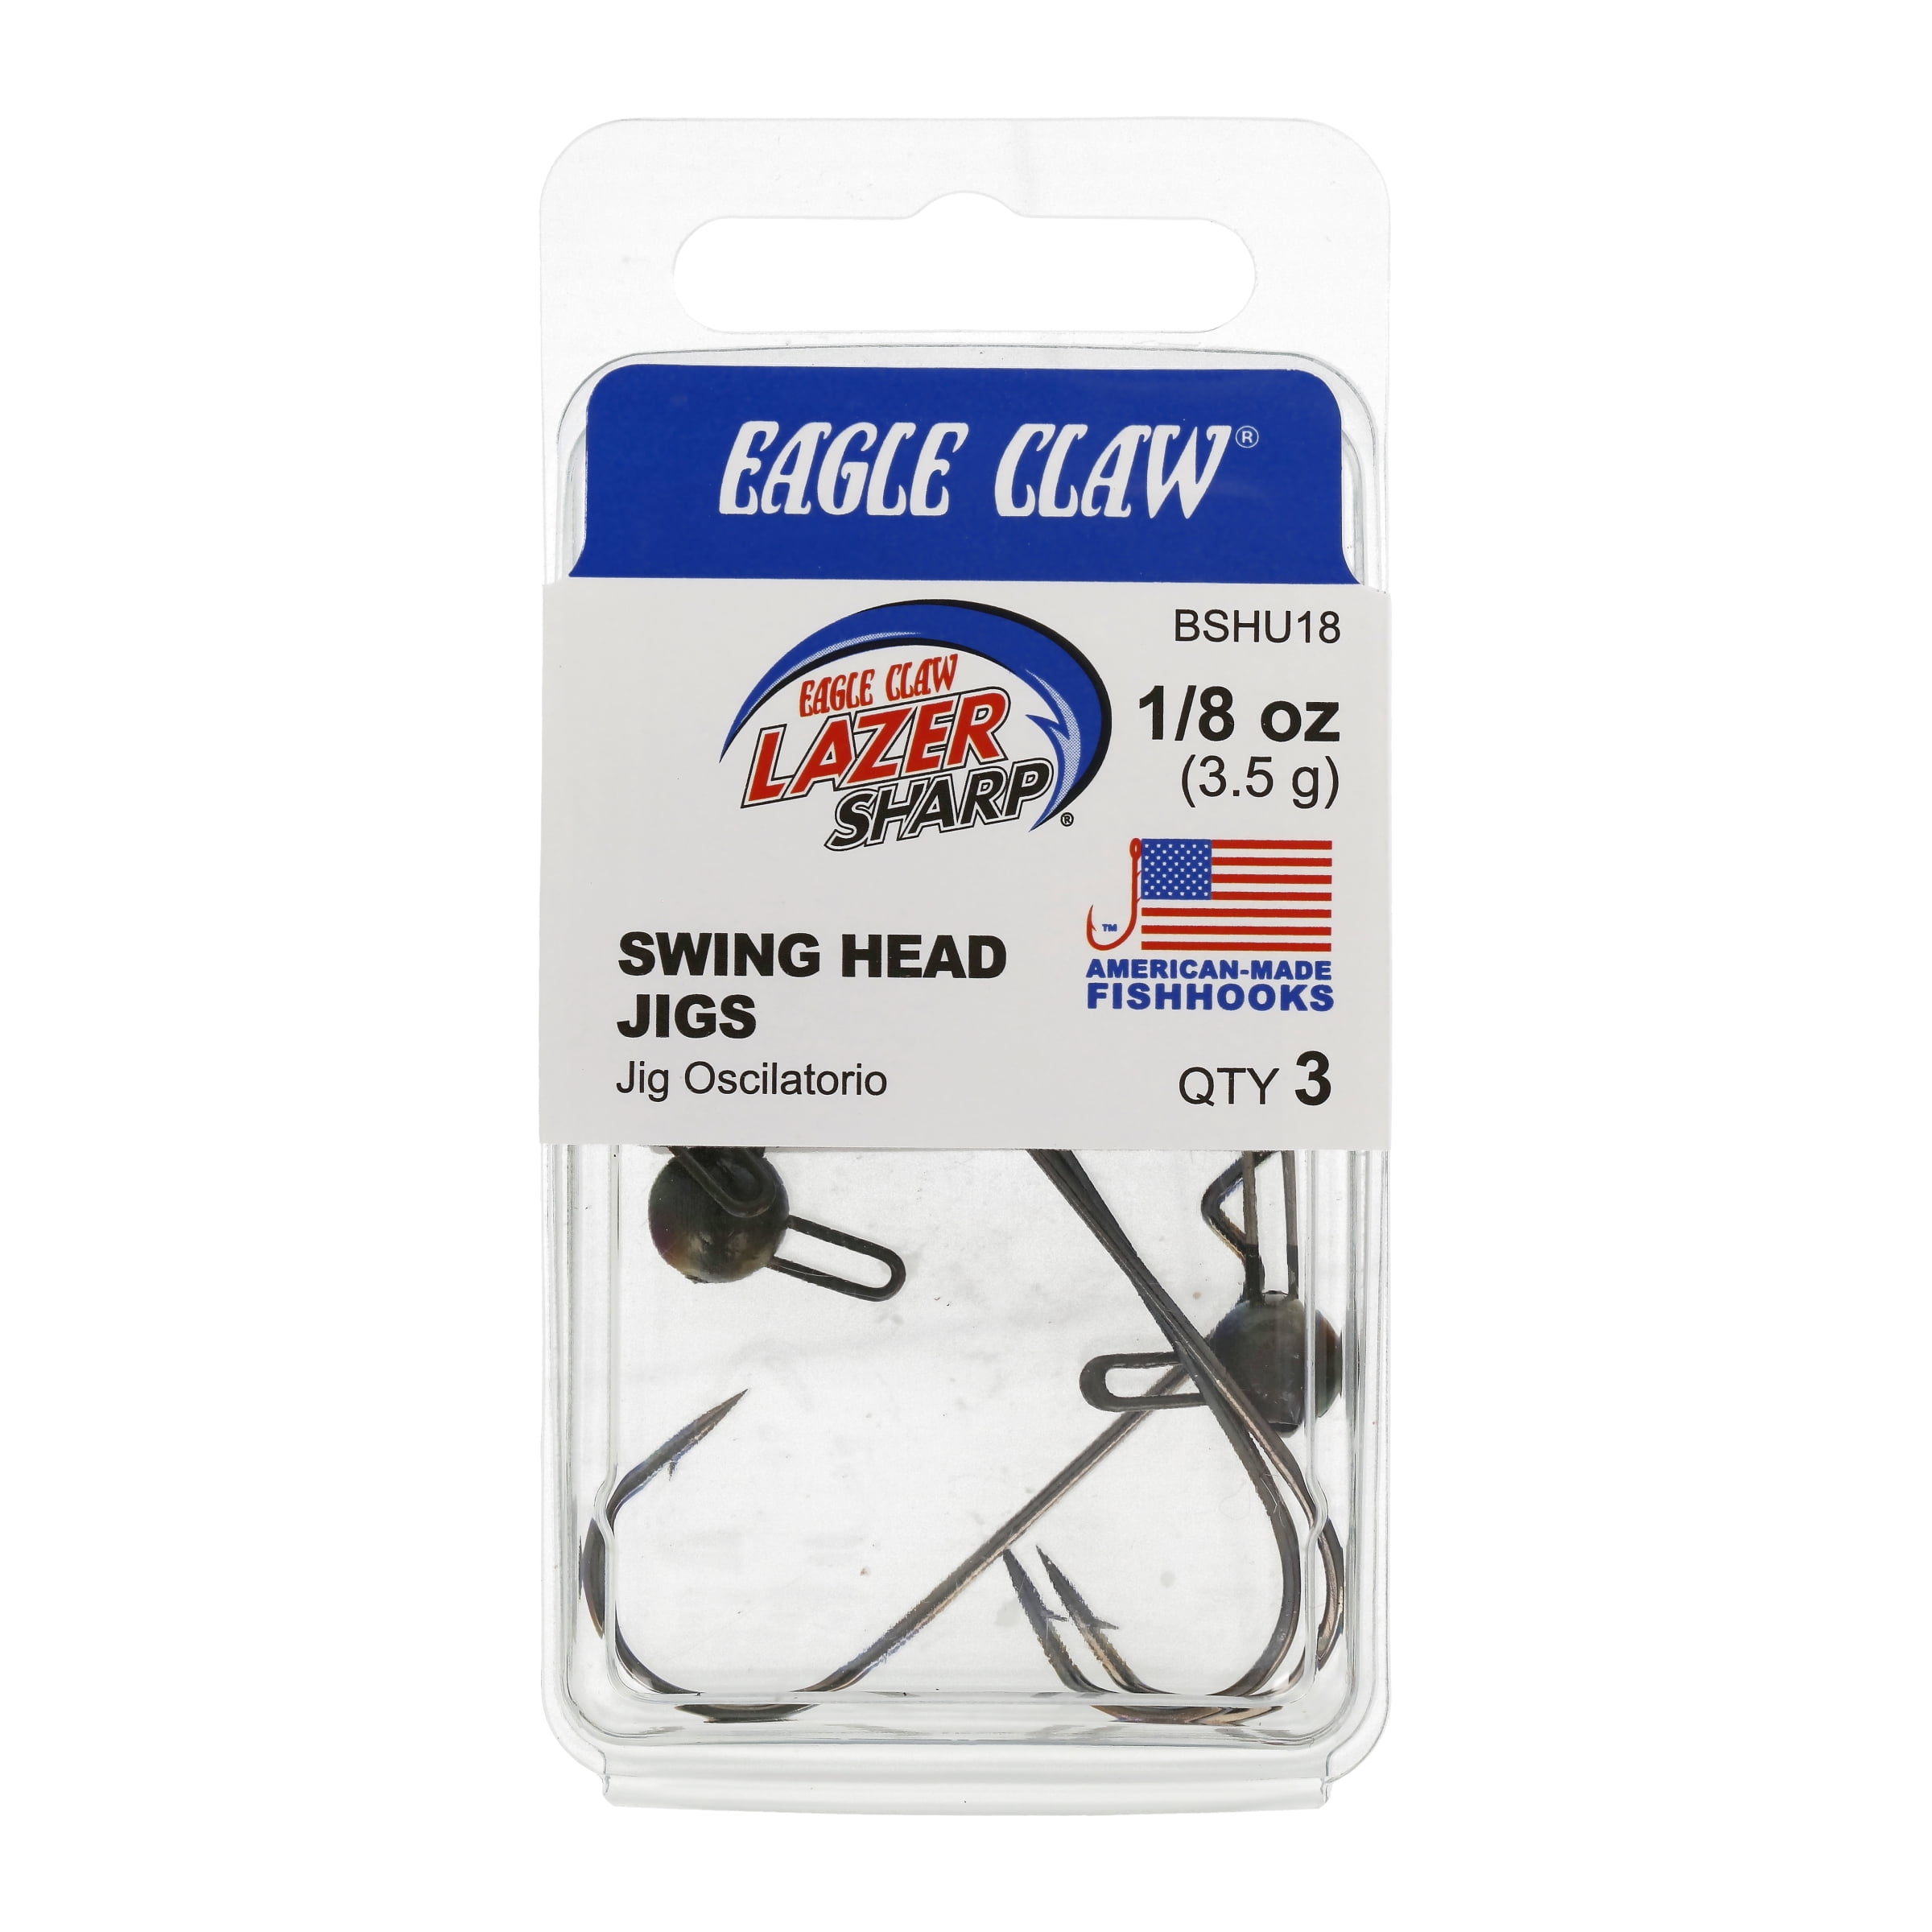 Eagle Claw Lazer Sharp Swing Head Fishing Jig, Green Pumpkin, 1/4 oz., Bshu14